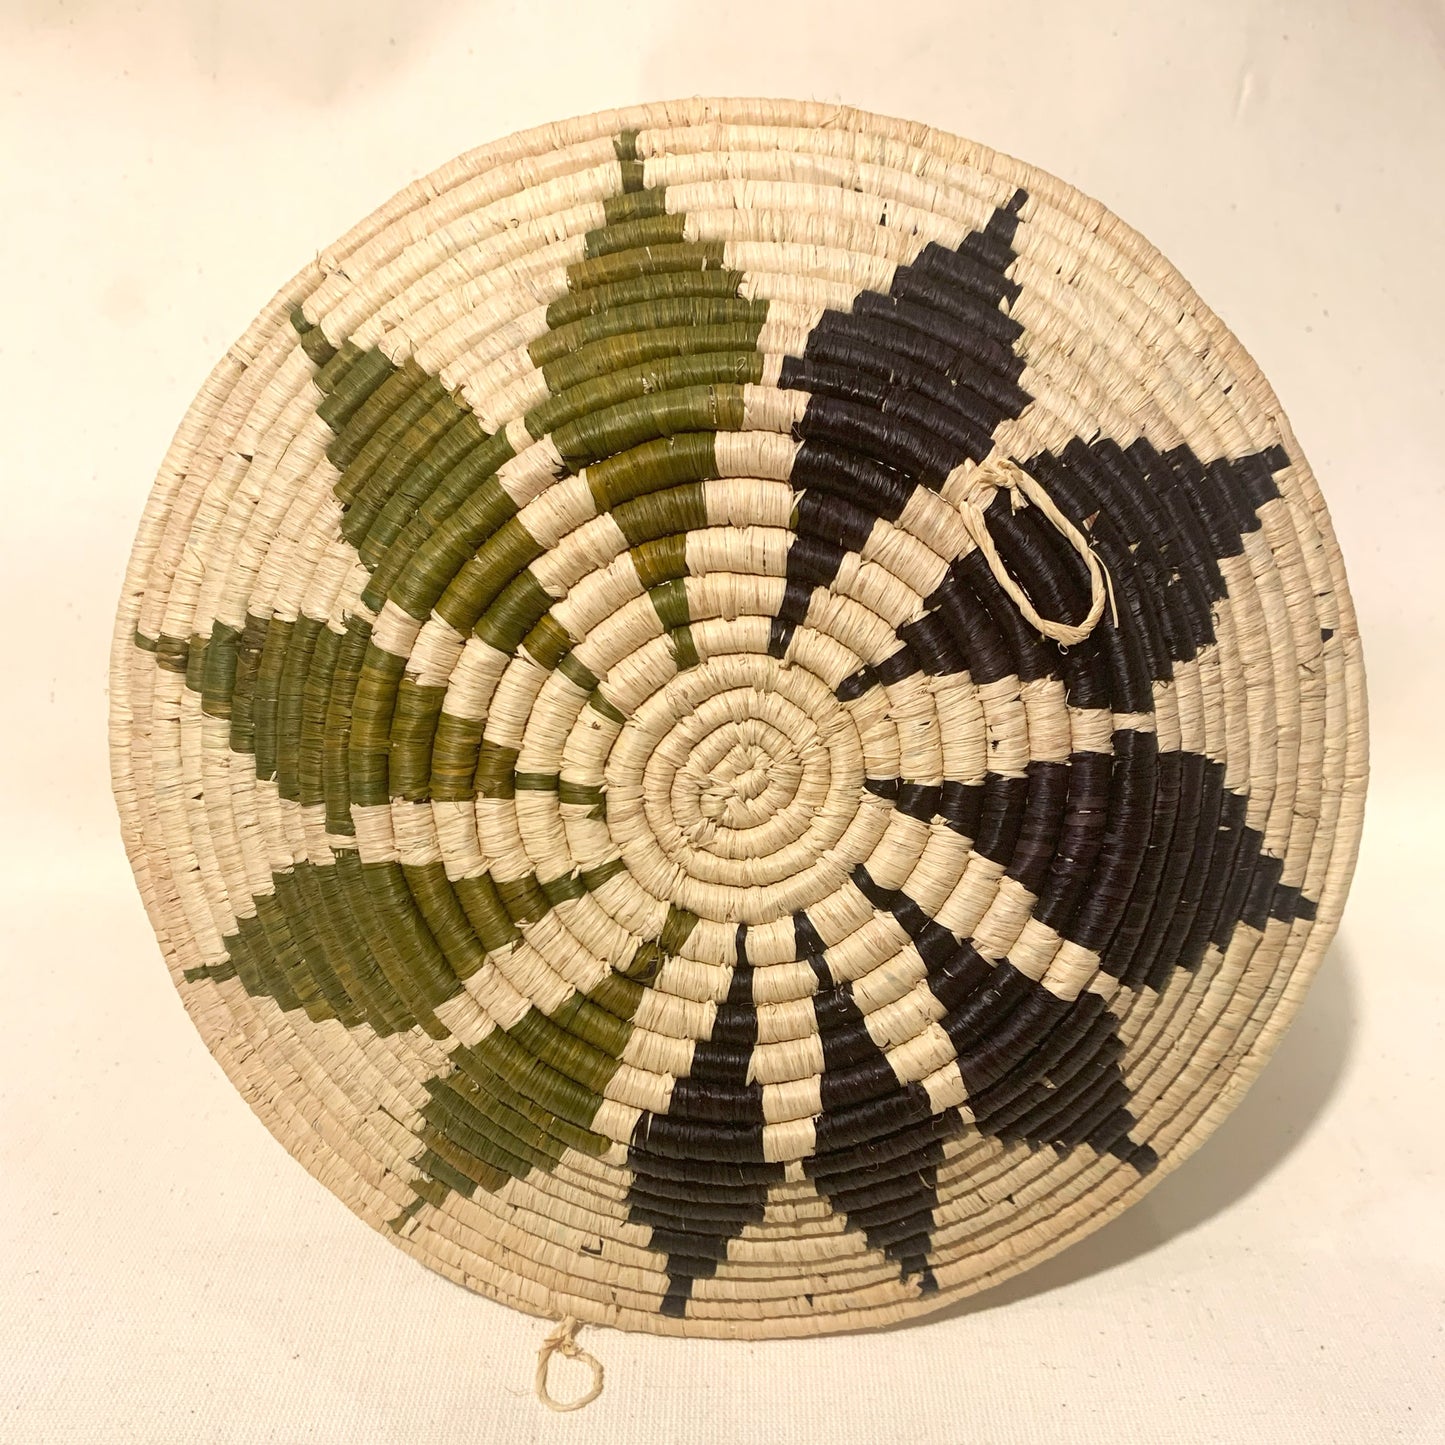 Green and Black Flower Handmade African Basket / Ugandan Basket / Woven Basket